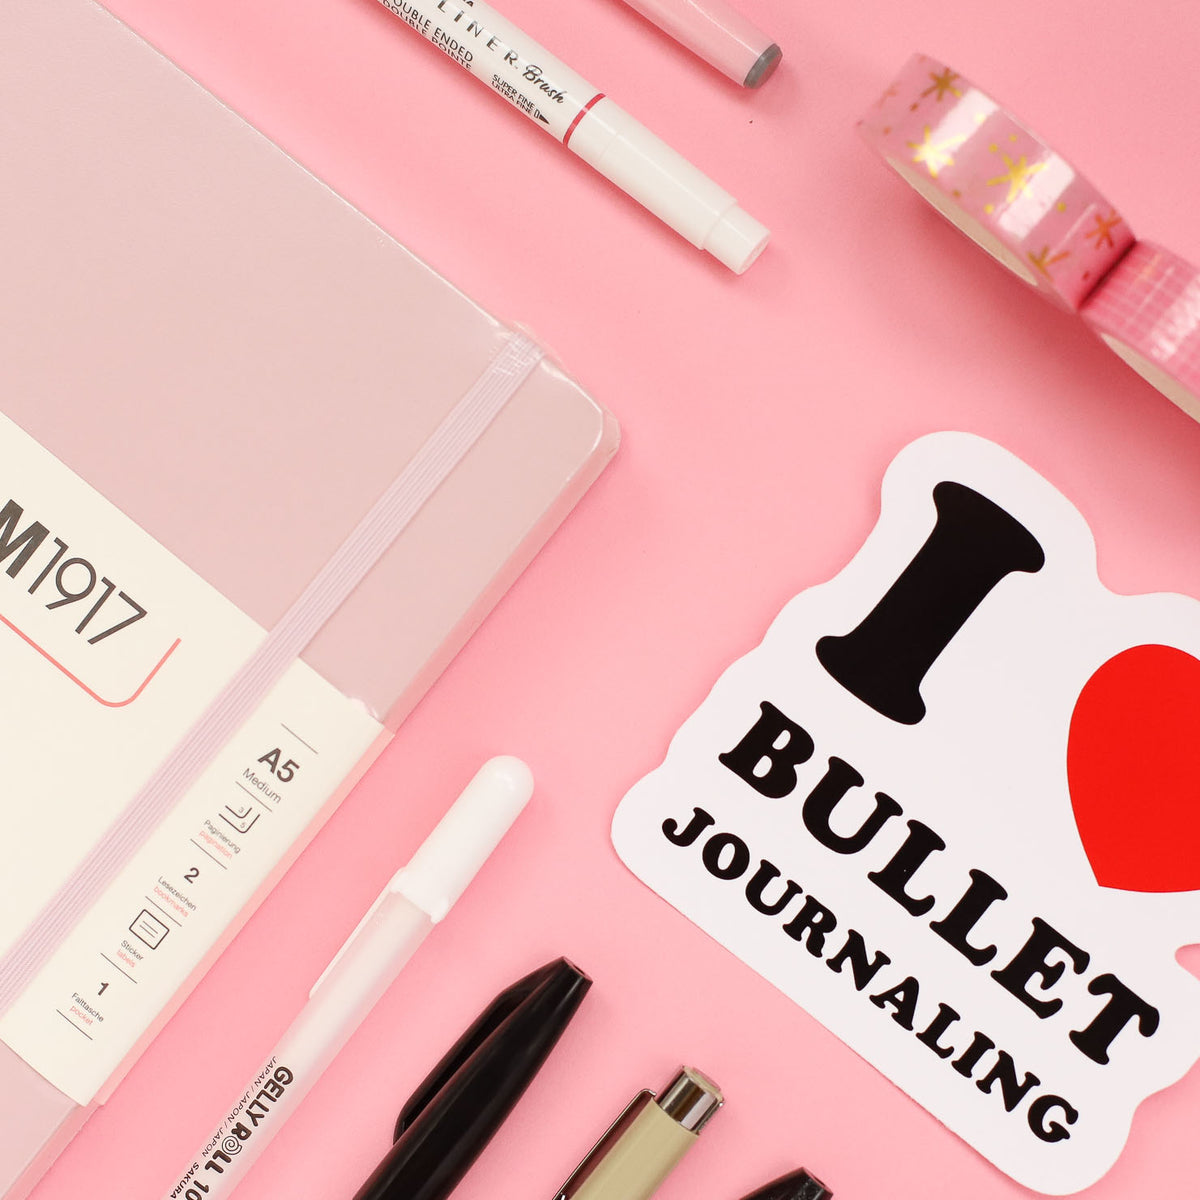 Beginner Supplies for Bullet Journaling - Chocolate Musings